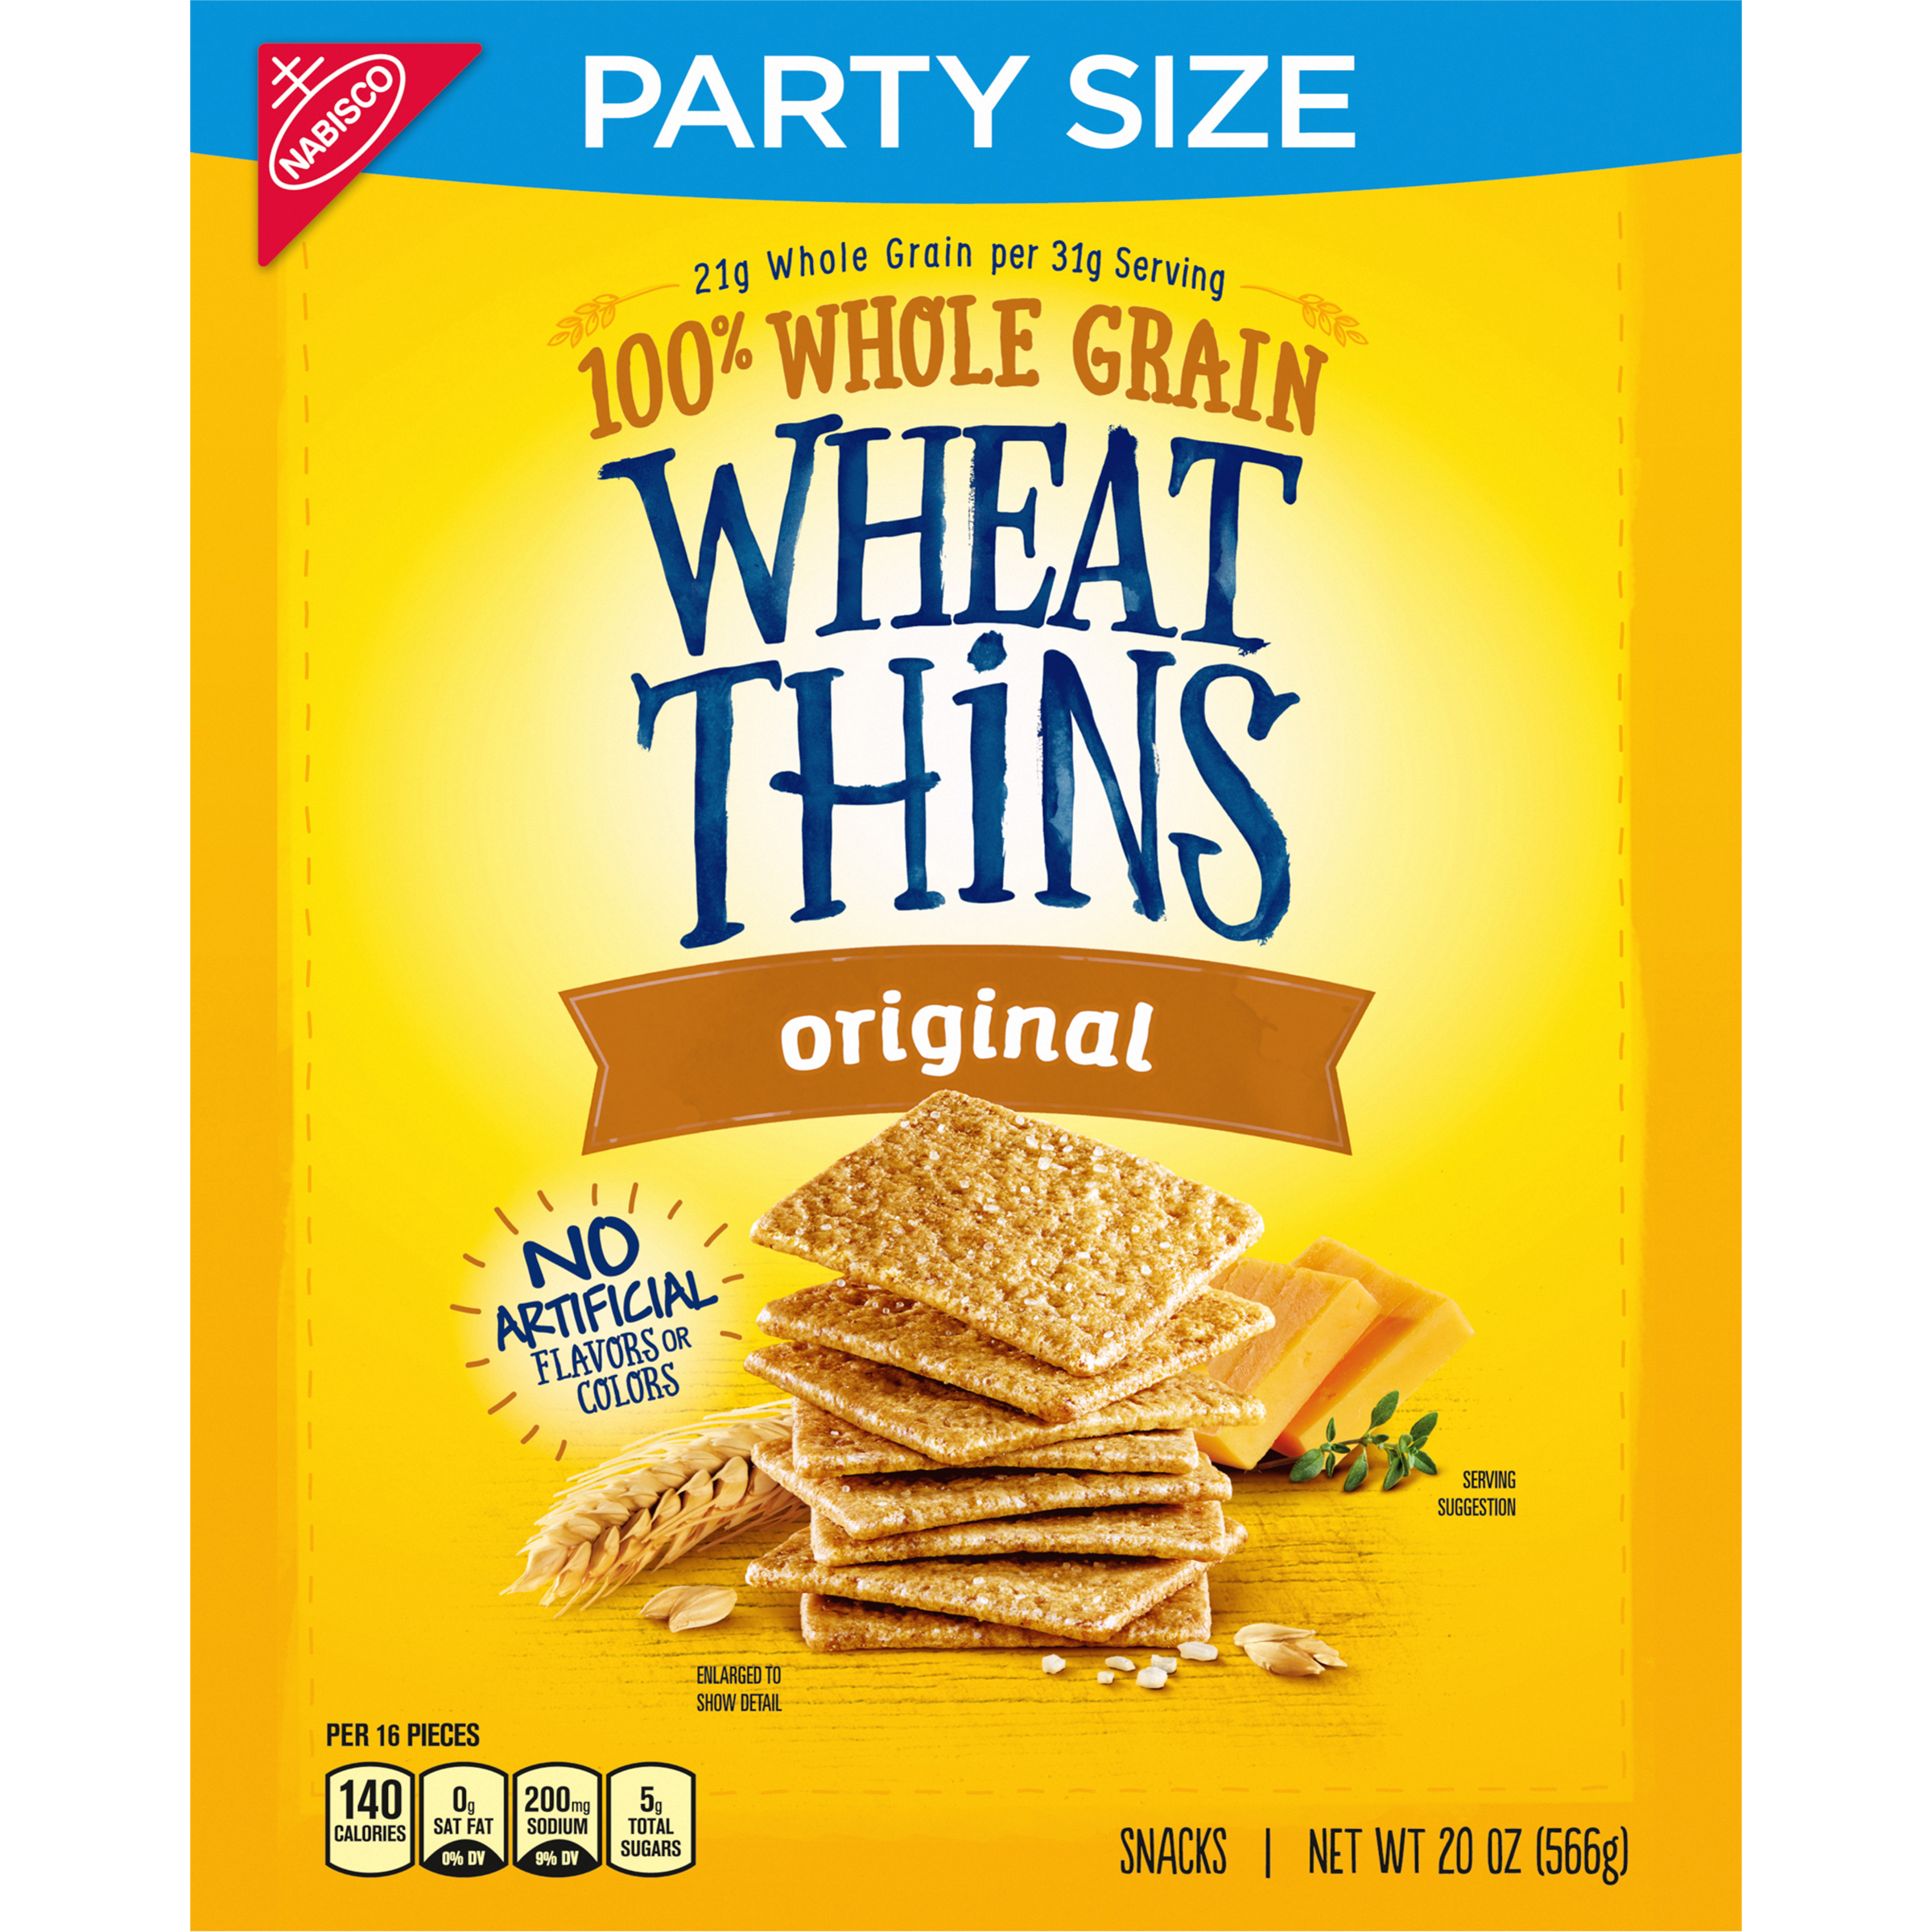 Wheat Thins Original Whole Grain Wheat Crackers, Party Size, 20 oz Box-1